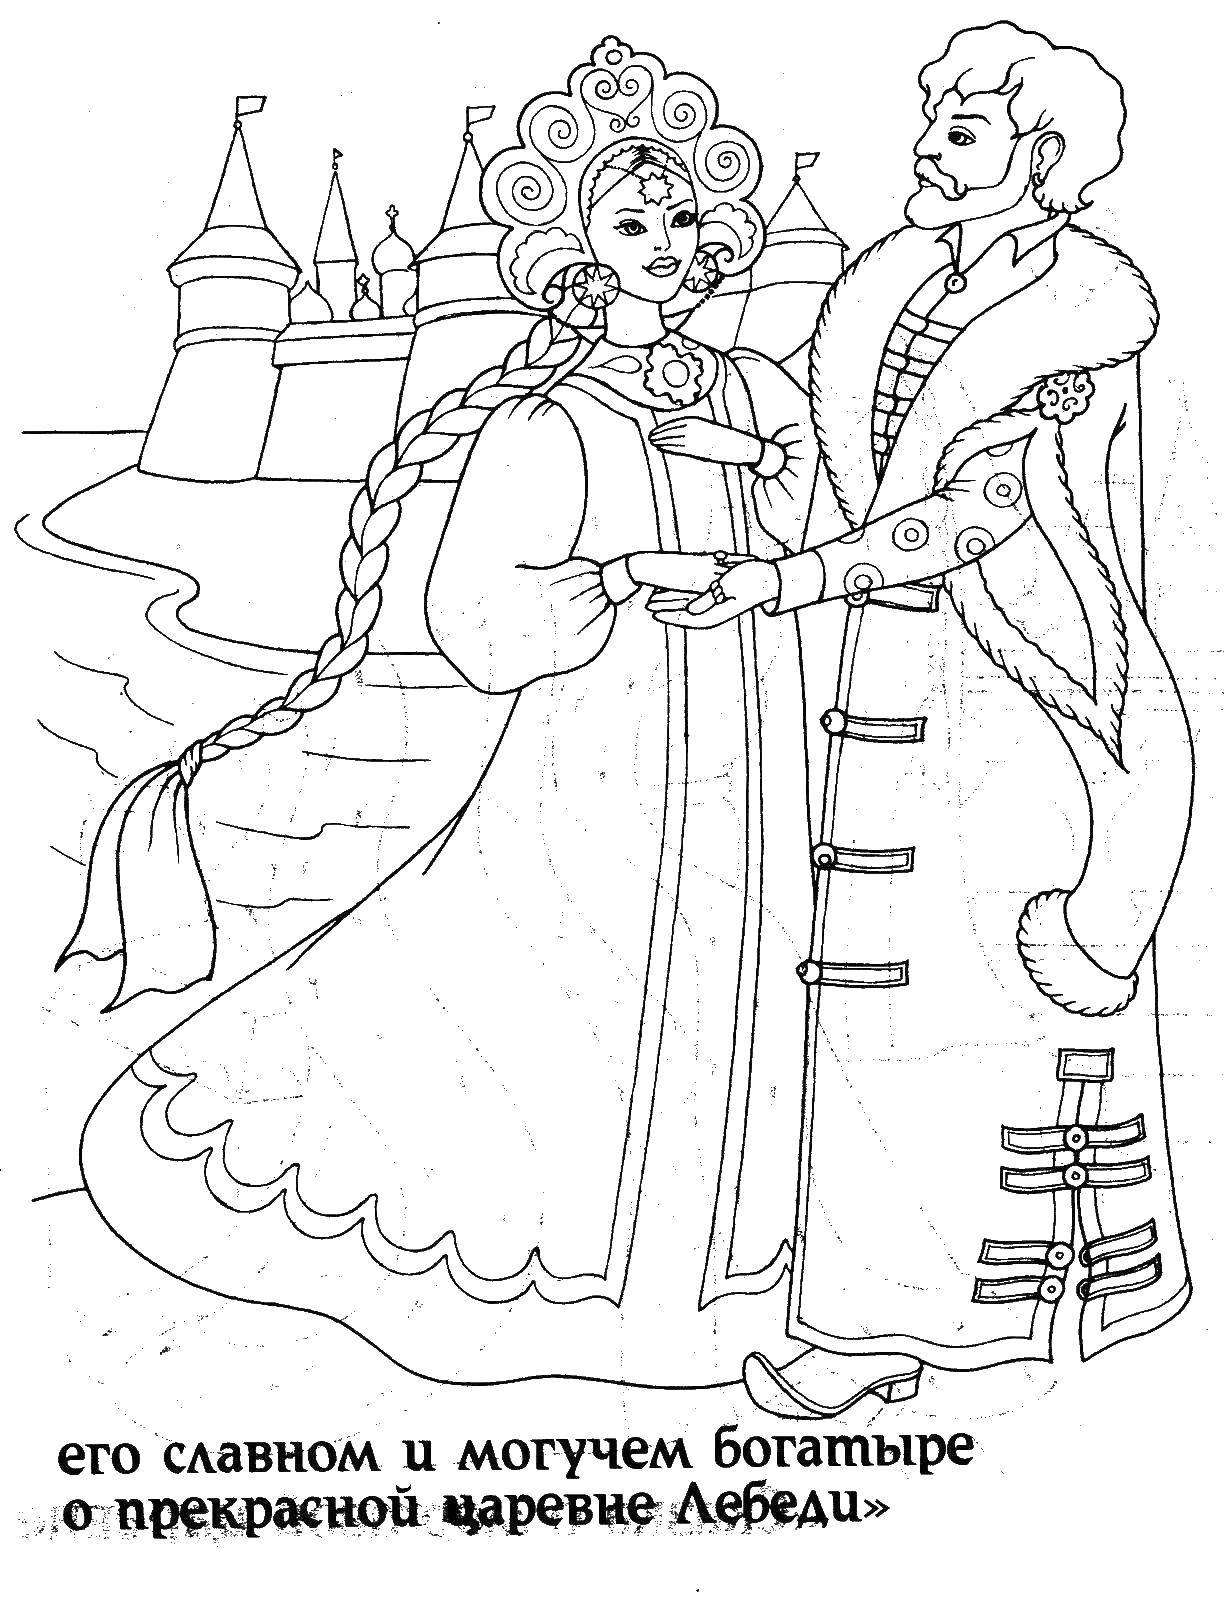 Coloring The Swan Princess and Hercules. Category Fairy tales. Tags:  Tsar Saltan.